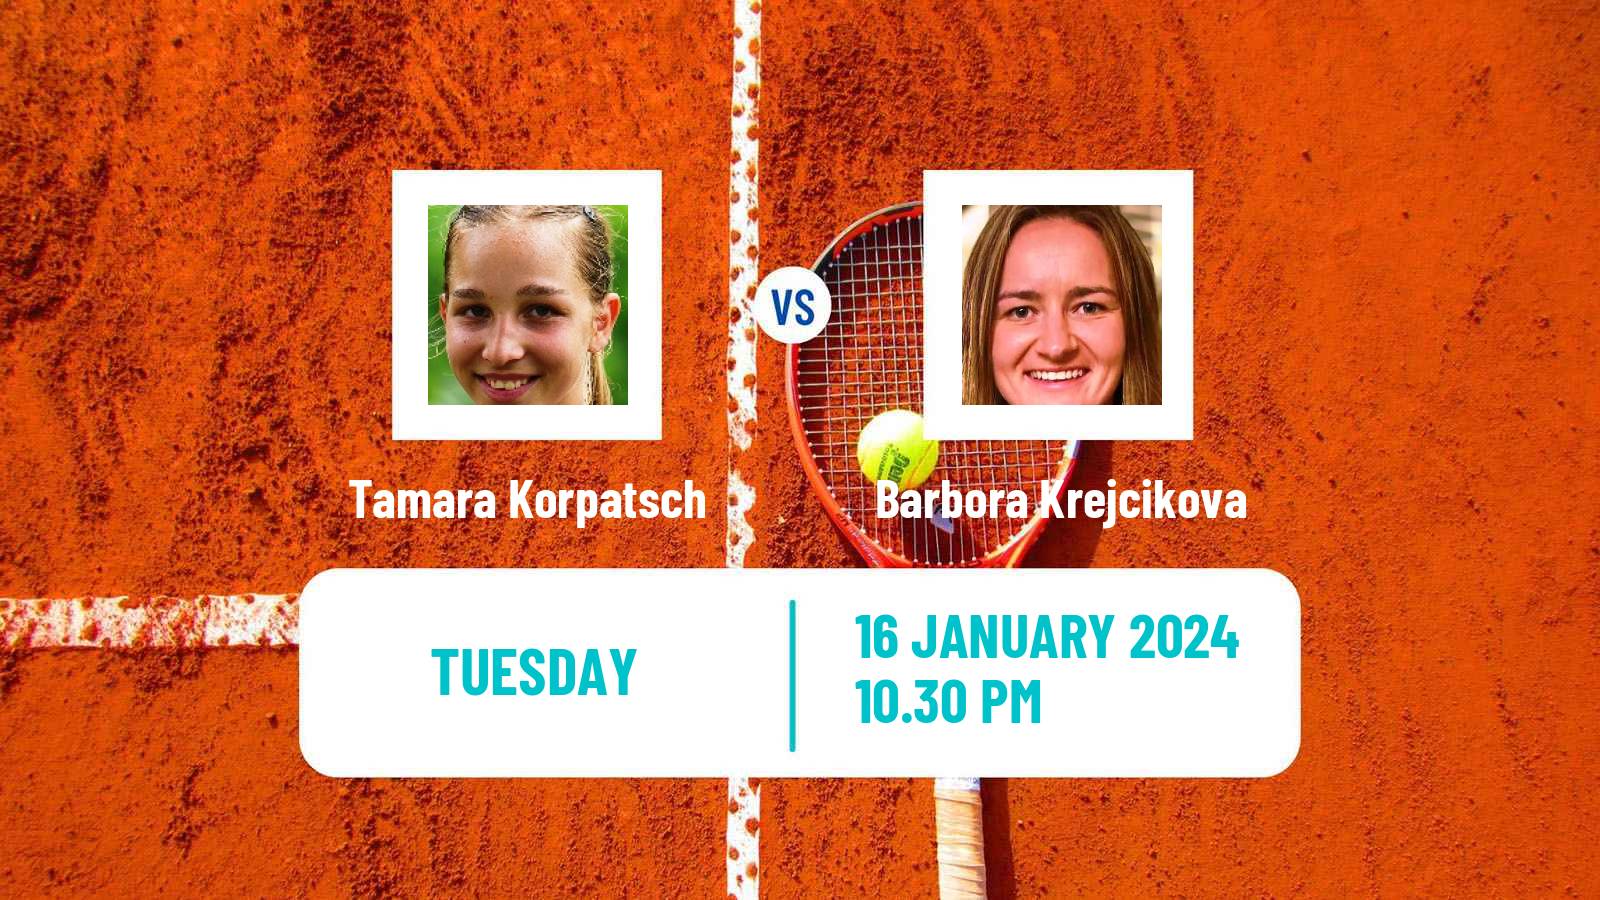 Tennis WTA Australian Open Tamara Korpatsch - Barbora Krejcikova